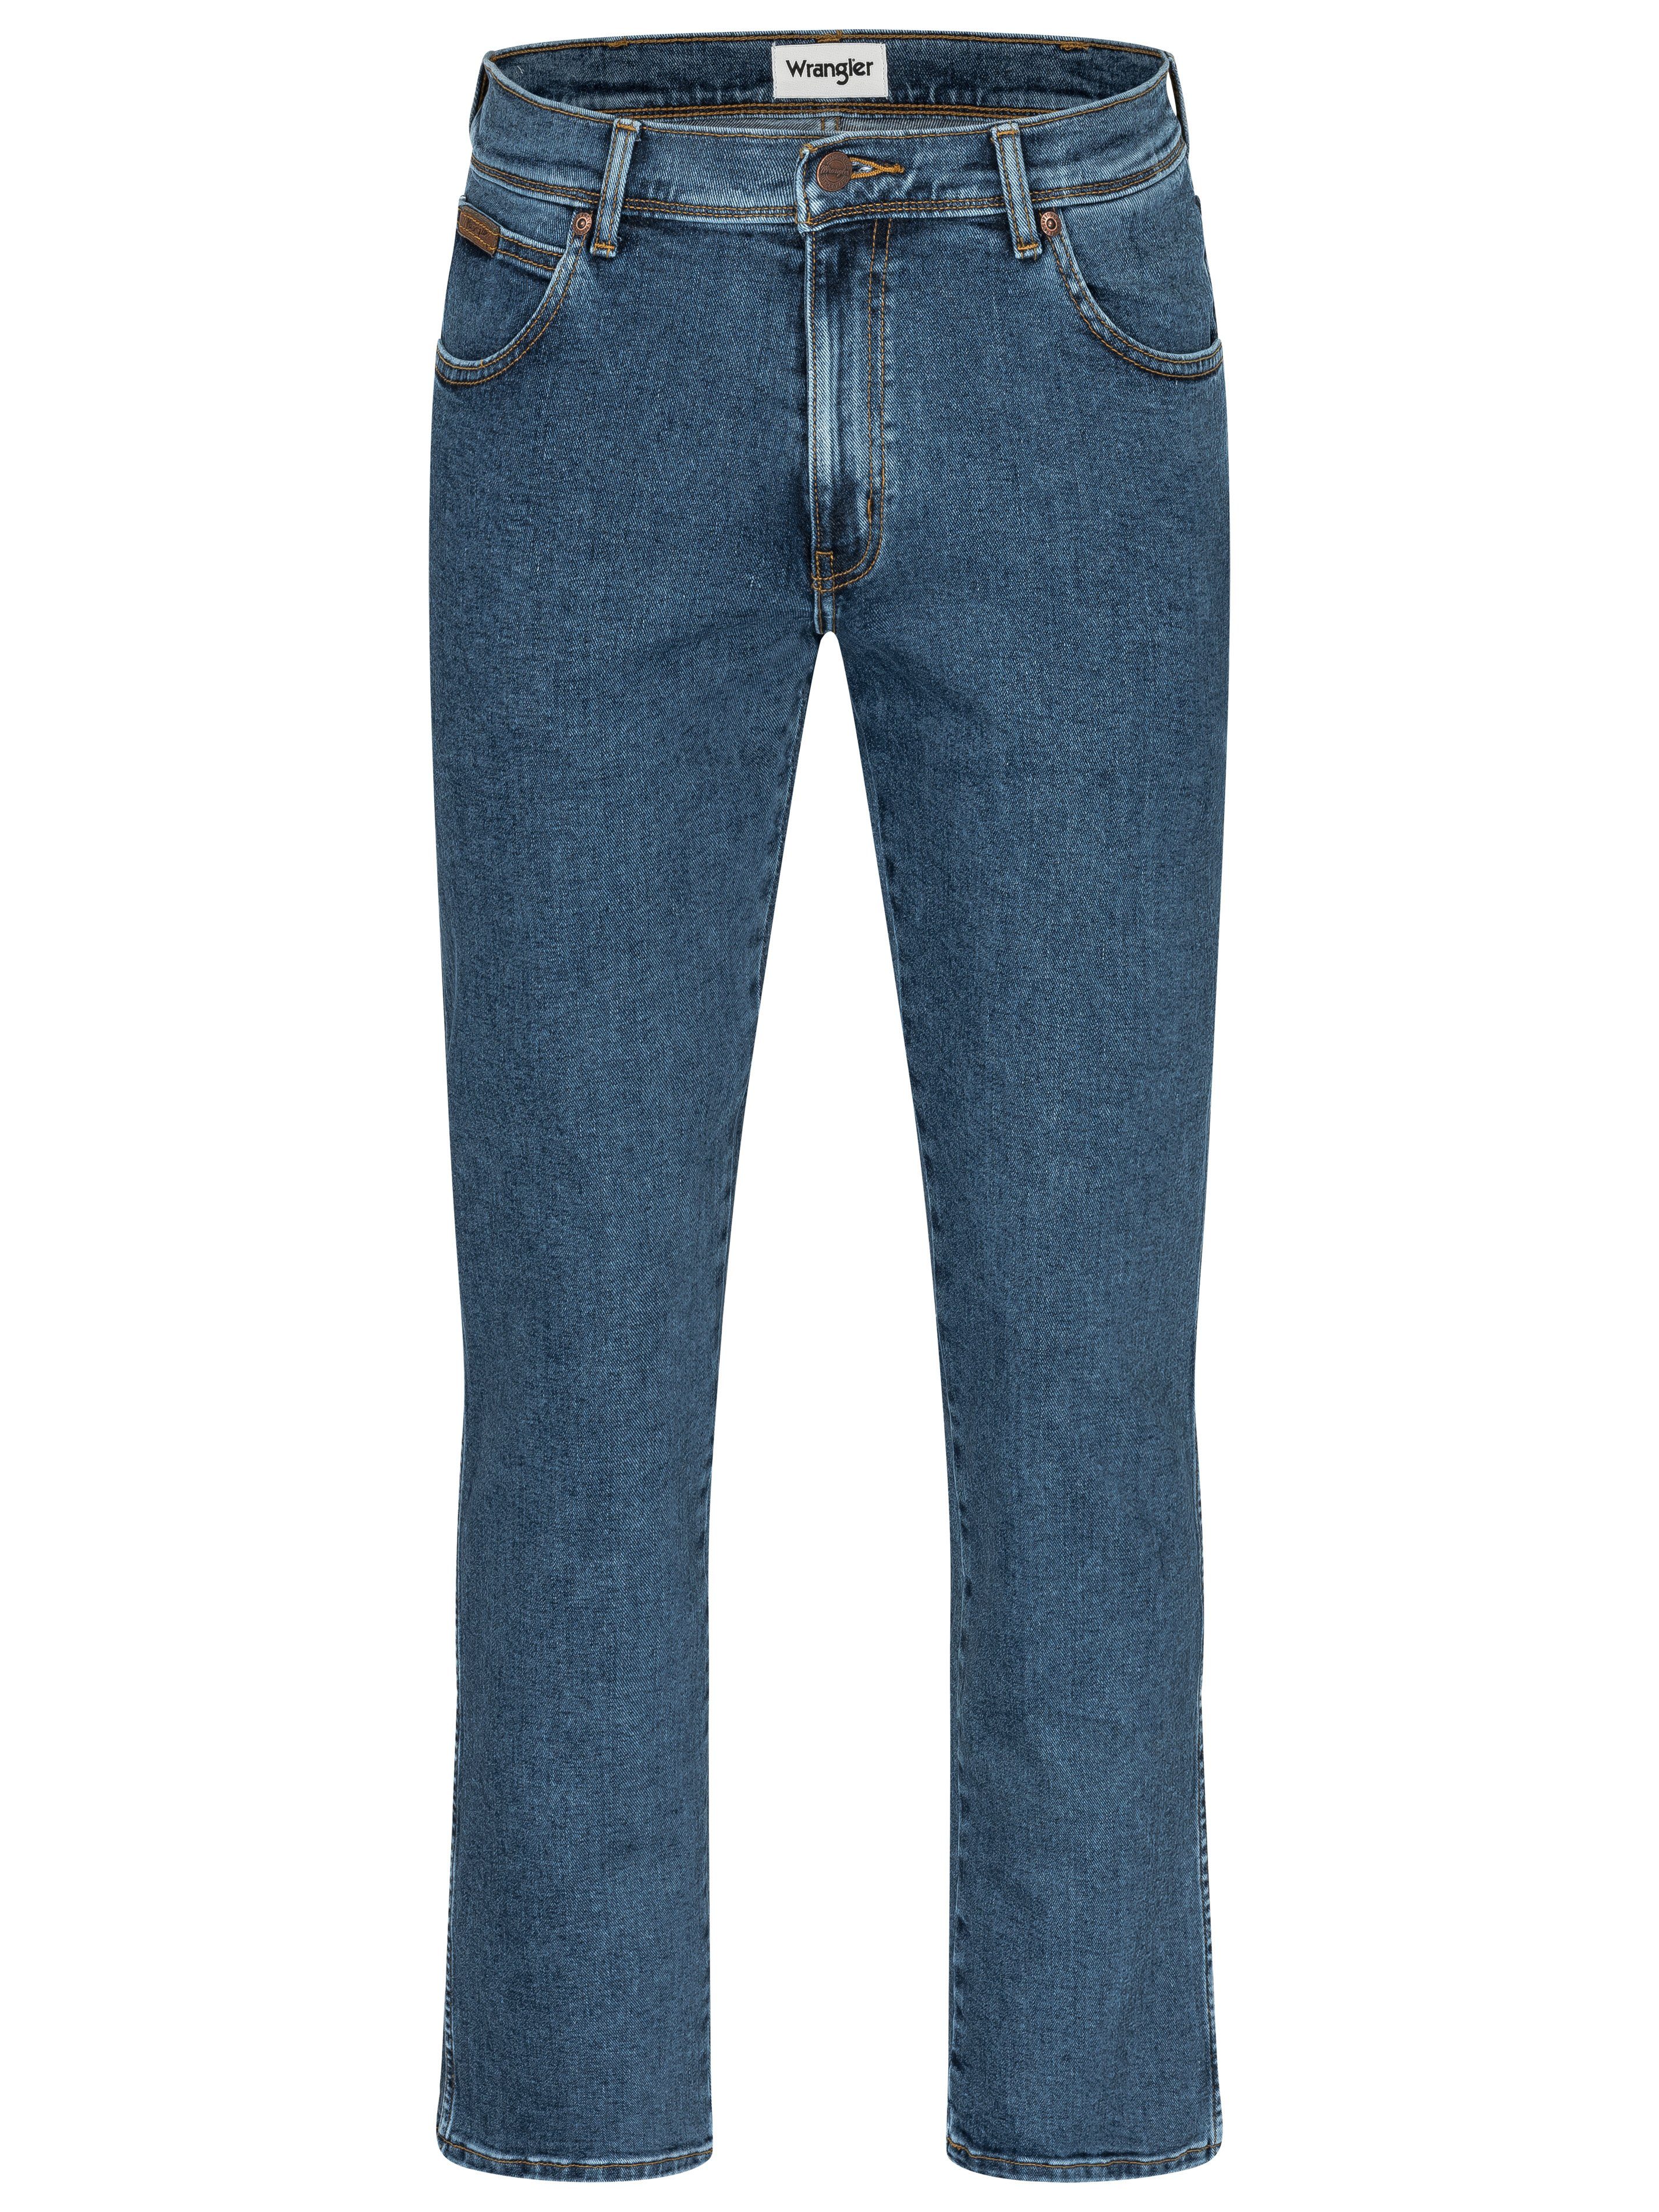 Wrangler Straight-Jeans Texas + Straight Jeans Authentic Stonewash Gürtel schwarzer Herrenjeans mit Gürtel Stretch